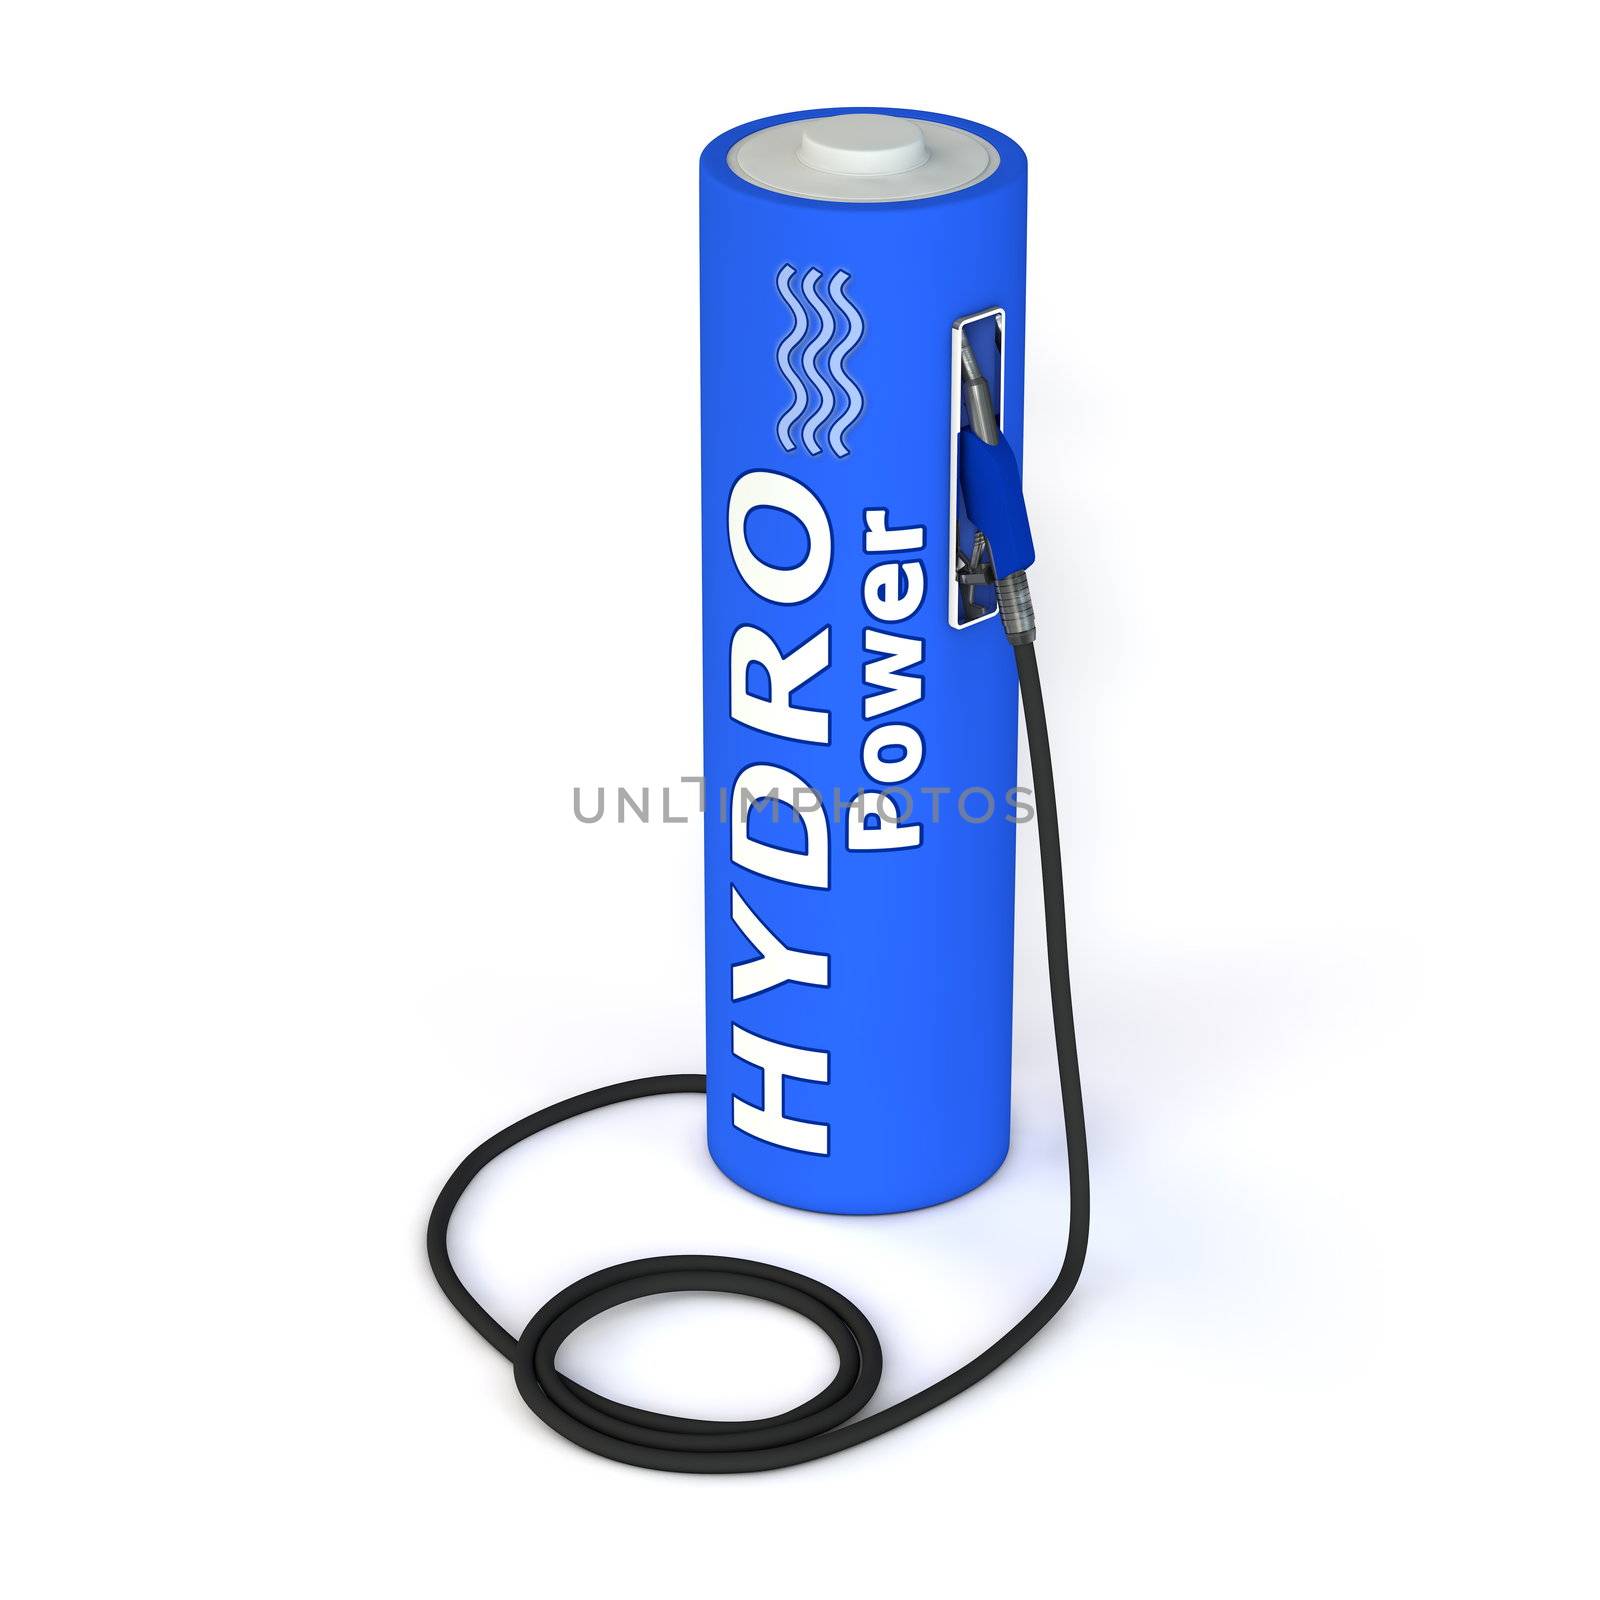 alternative energy hydro power - a dark blue battery as a fuel pump